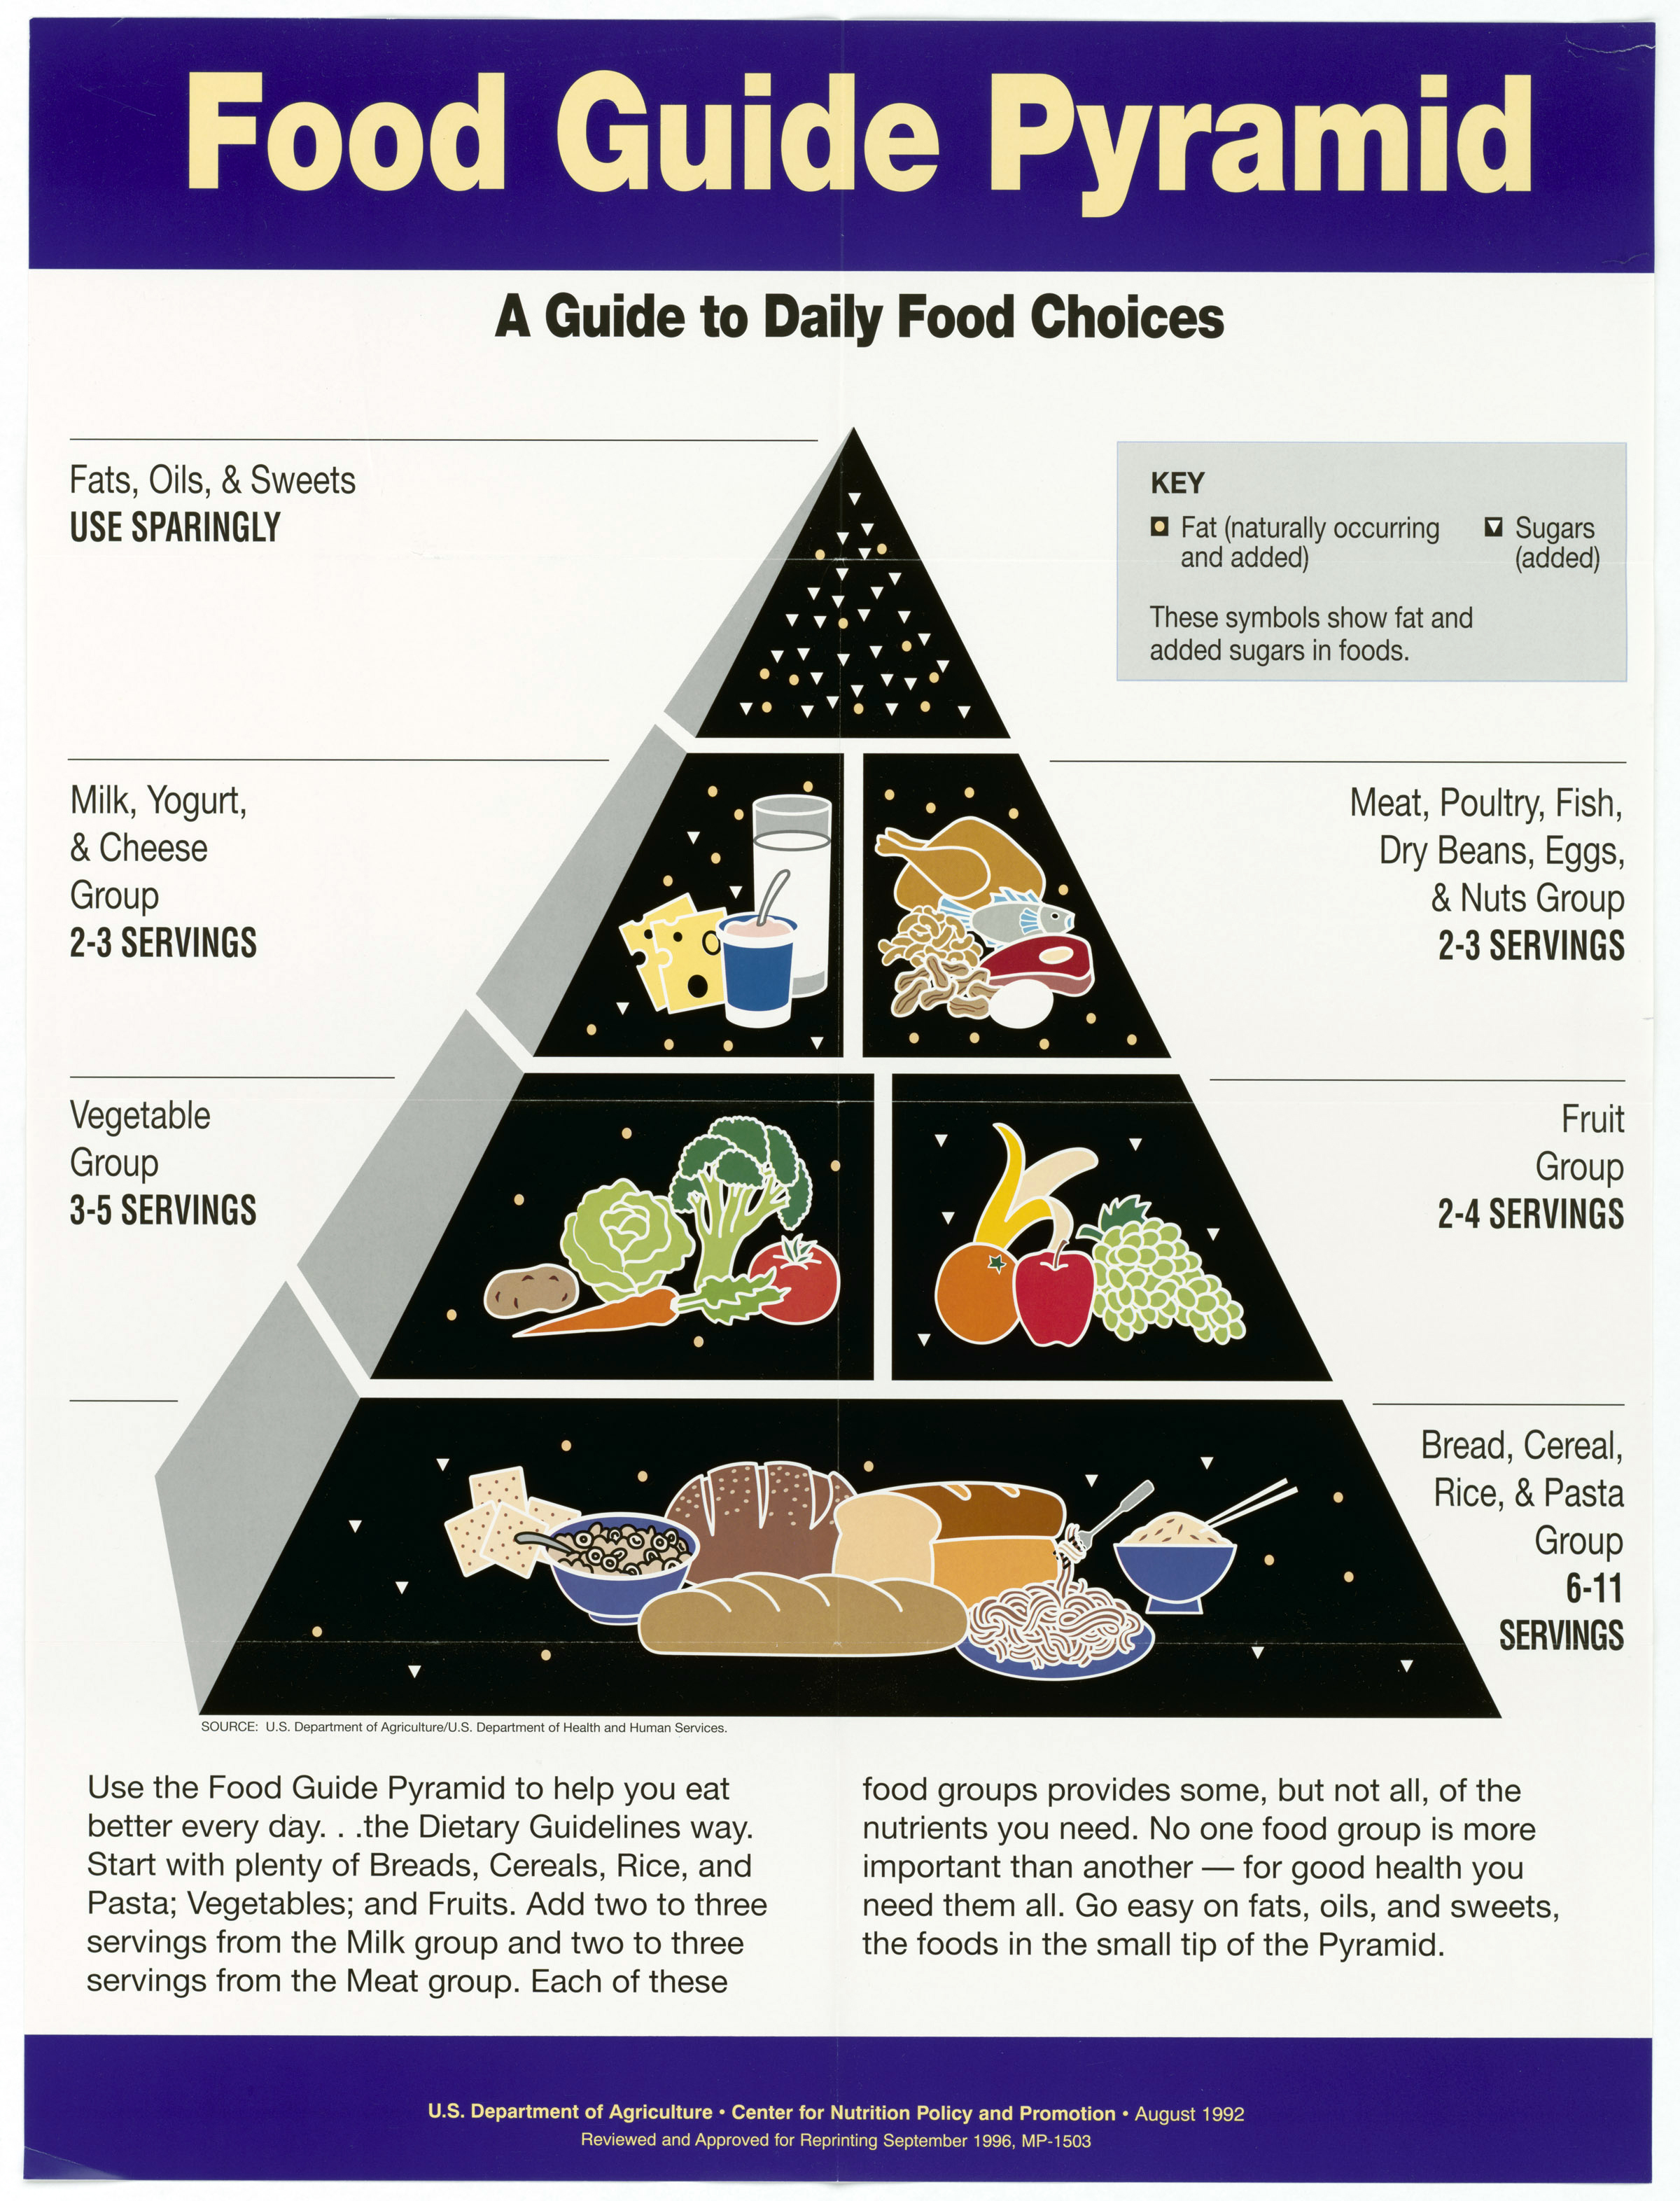 file-food-guide-pyramid-a-guide-to-daily-food-choices-nara-5710010-jpg